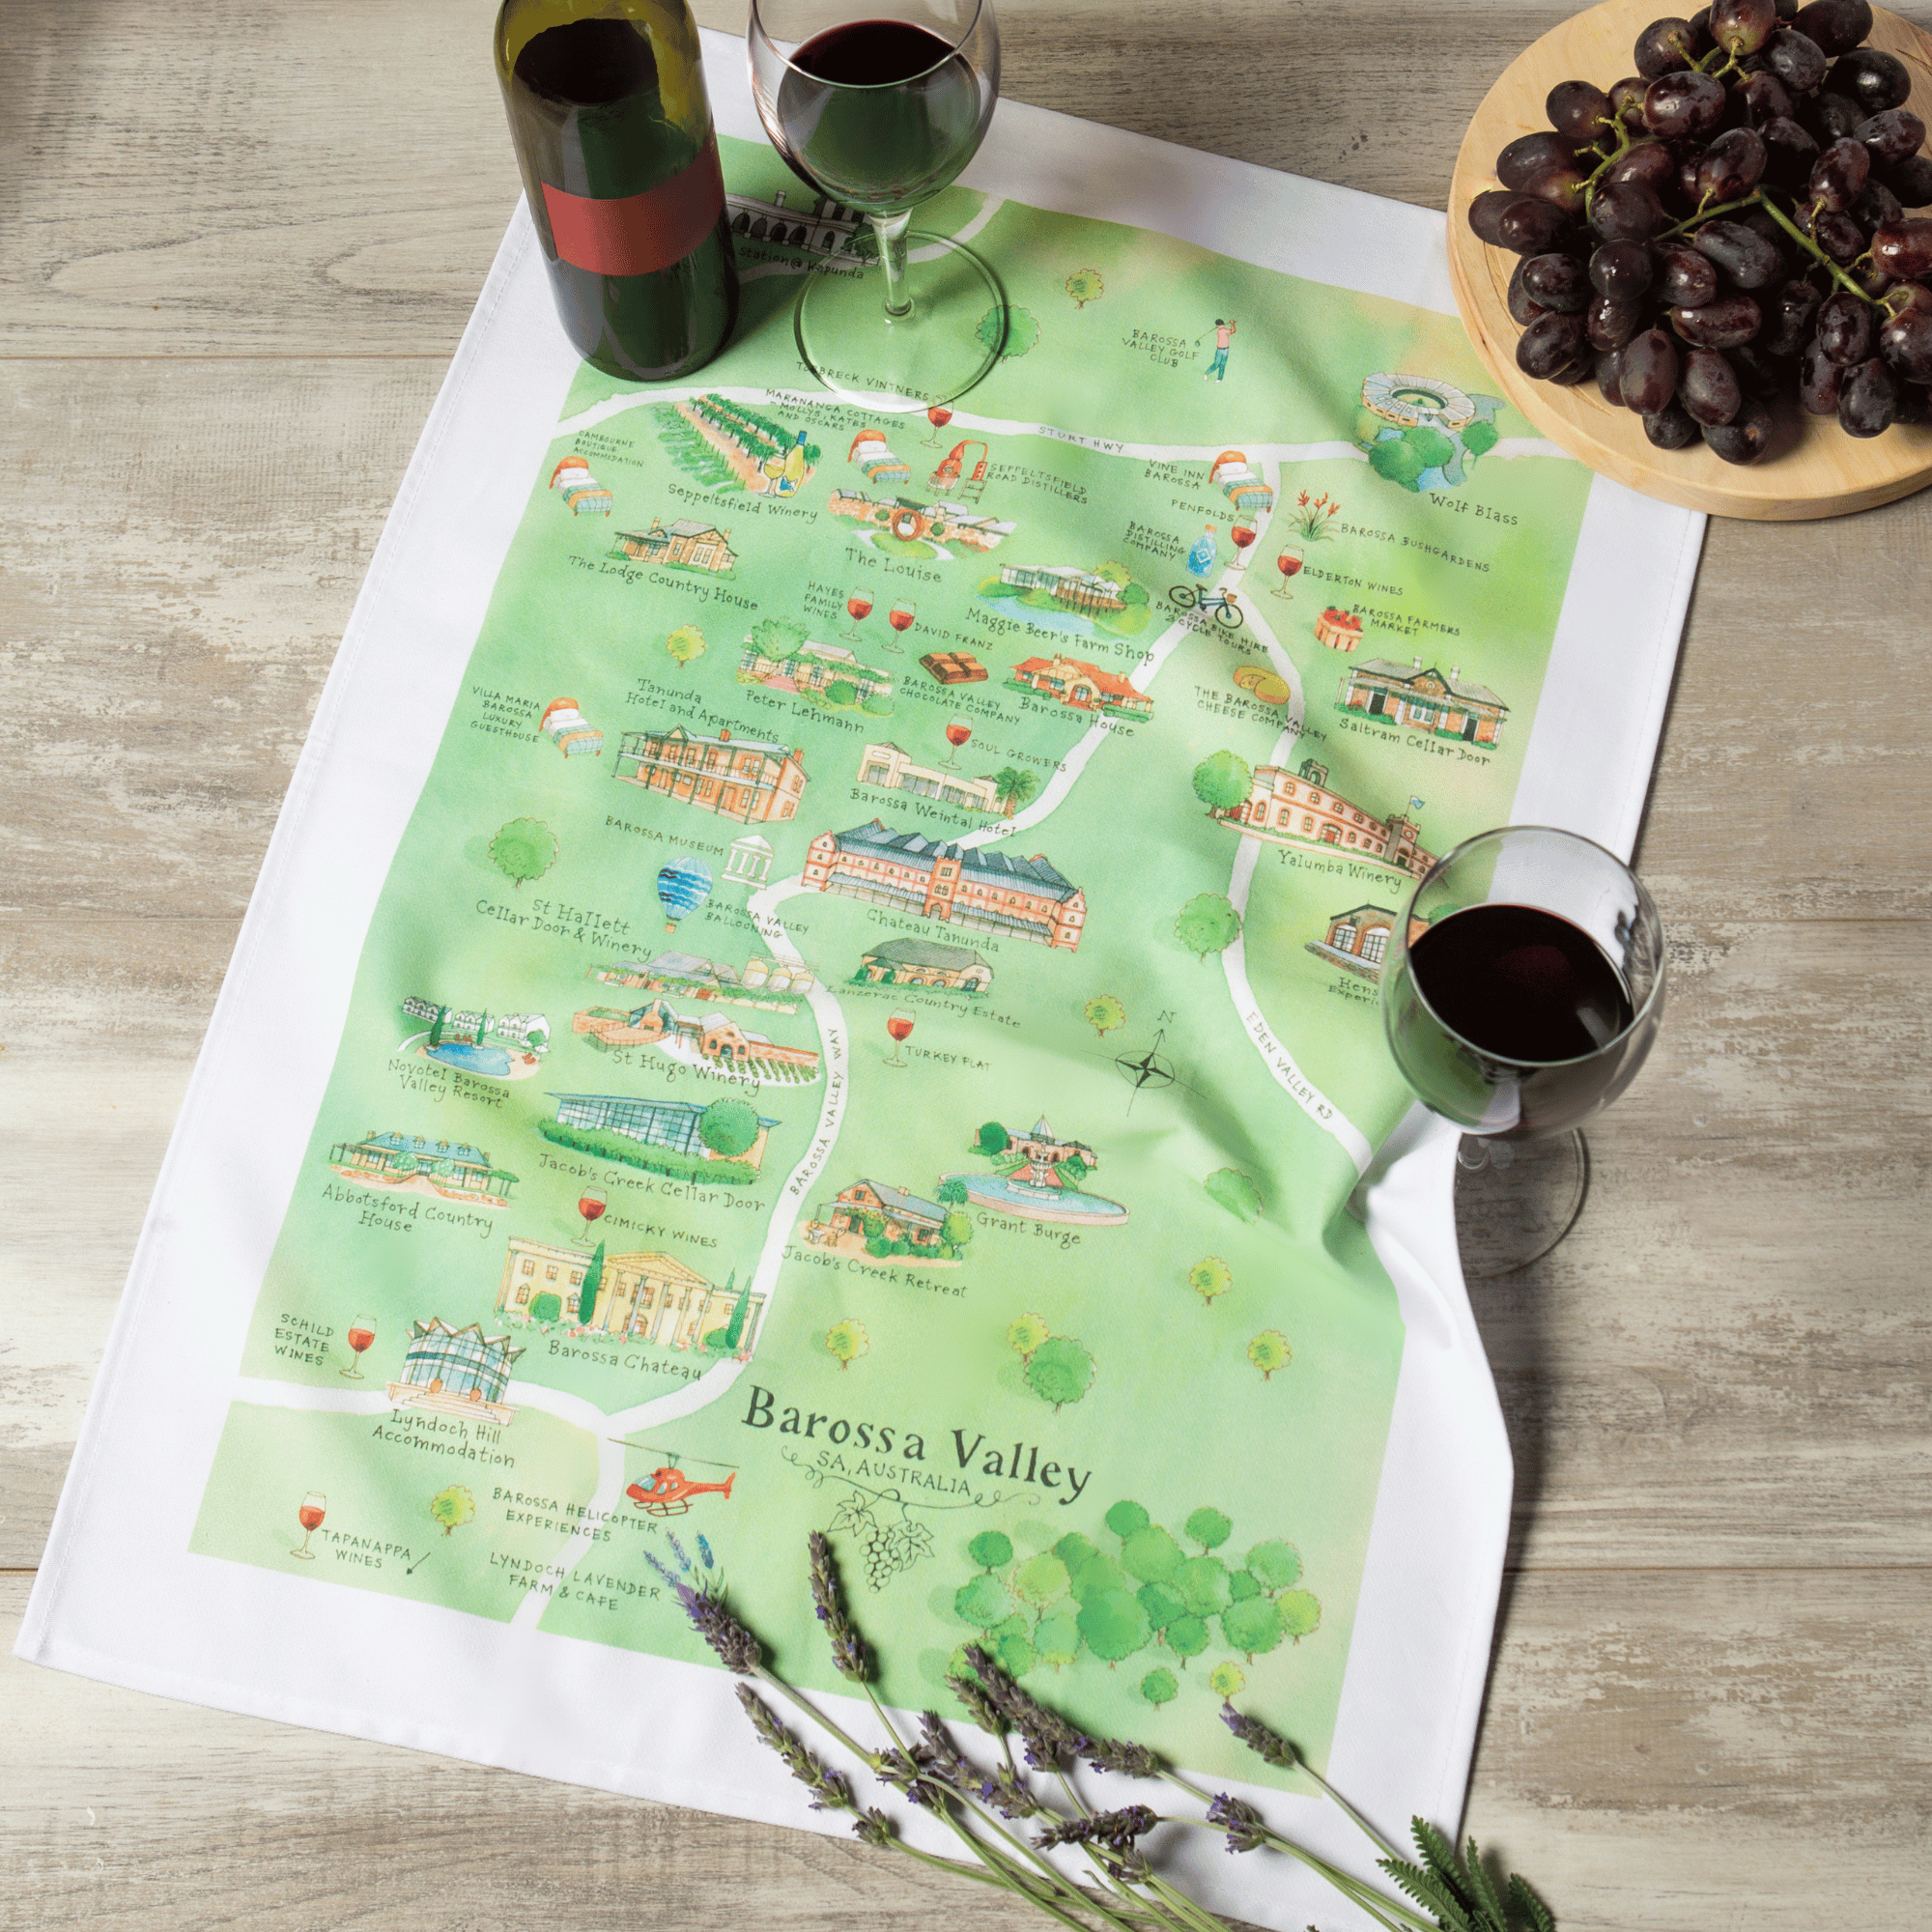 Barossa Valley wine region tea towel